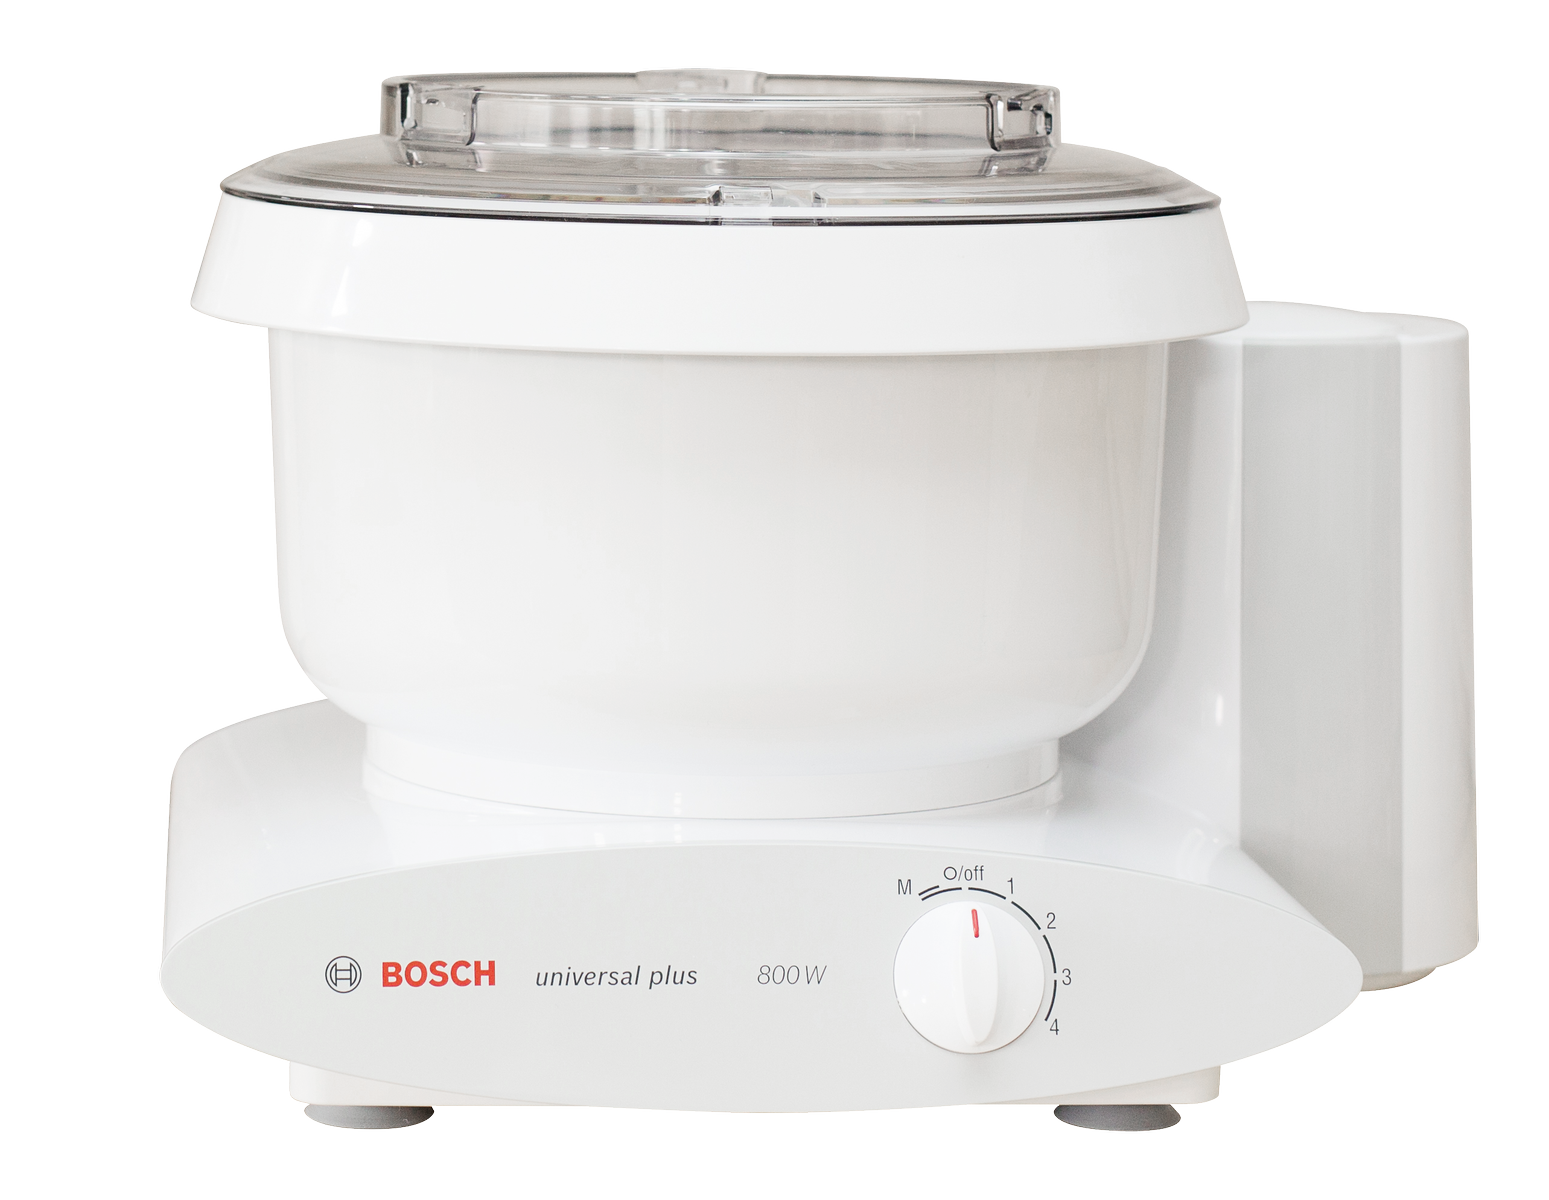 The Bosch Universal Plus Mixer 